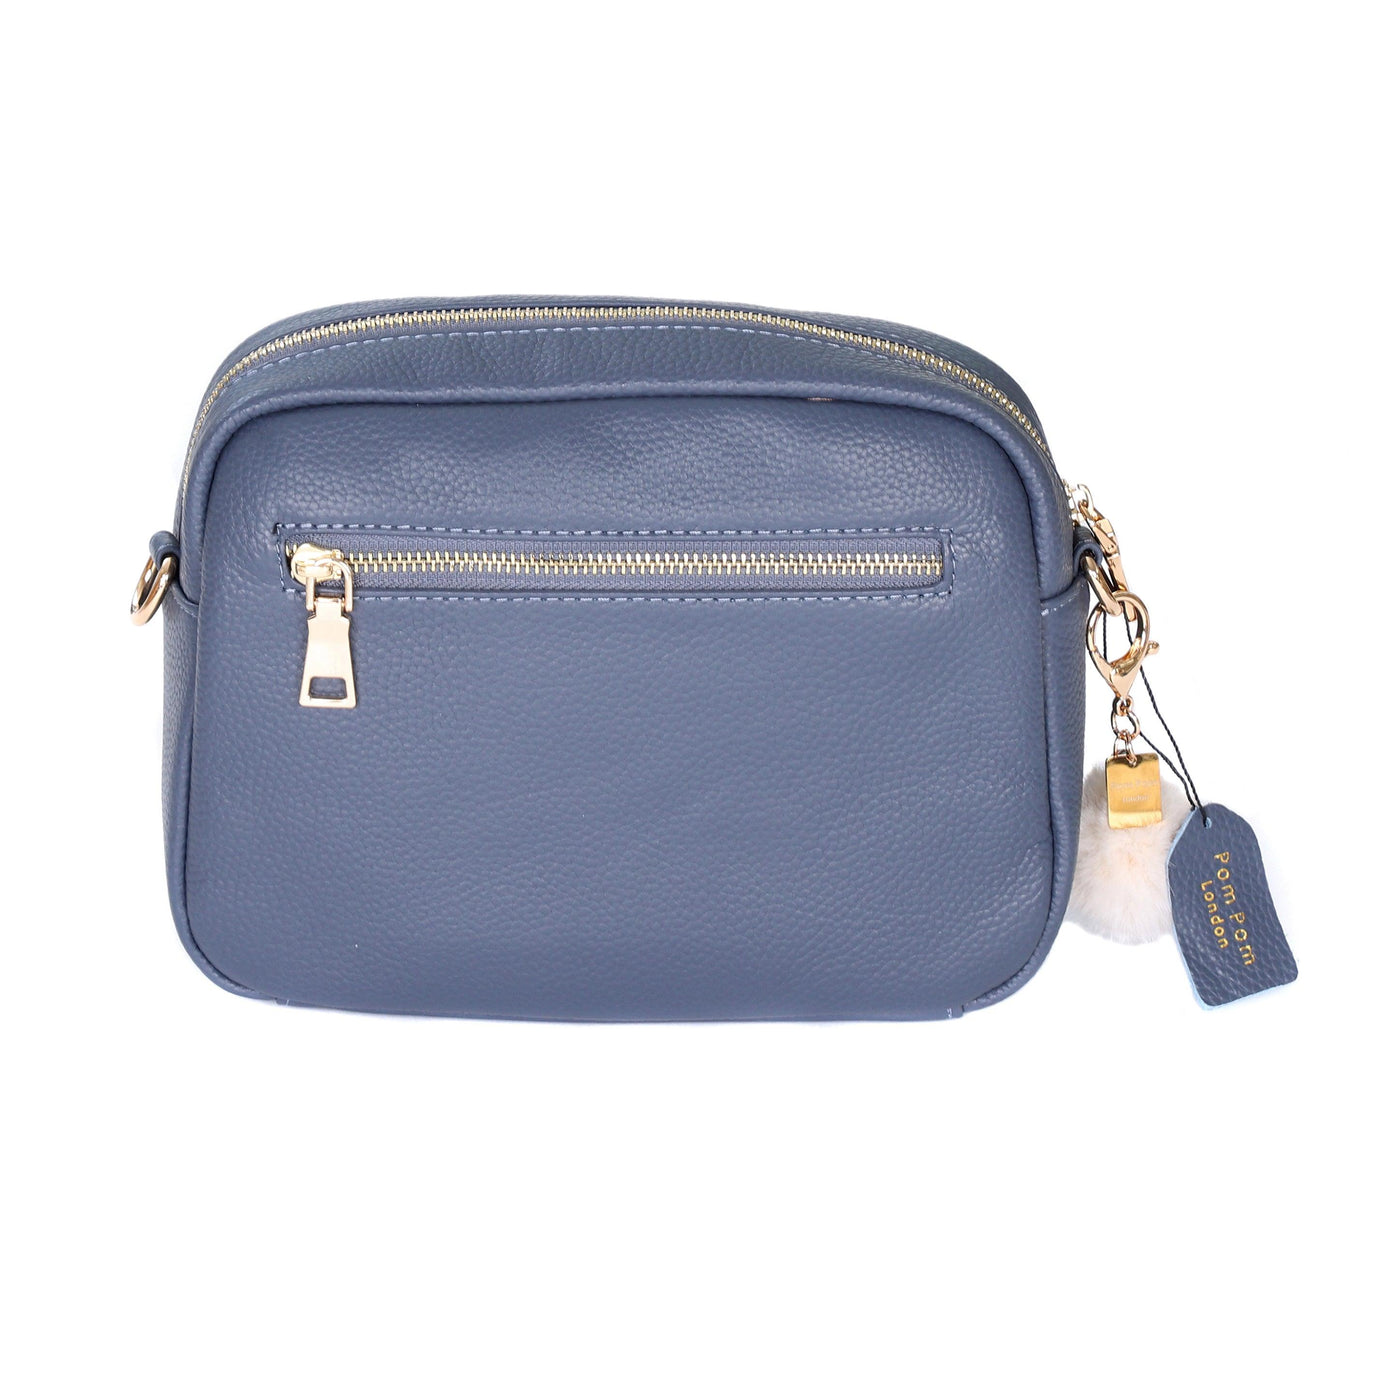 Mayfair Plus Bag Slate Blue & Accessories - Pom Pom London